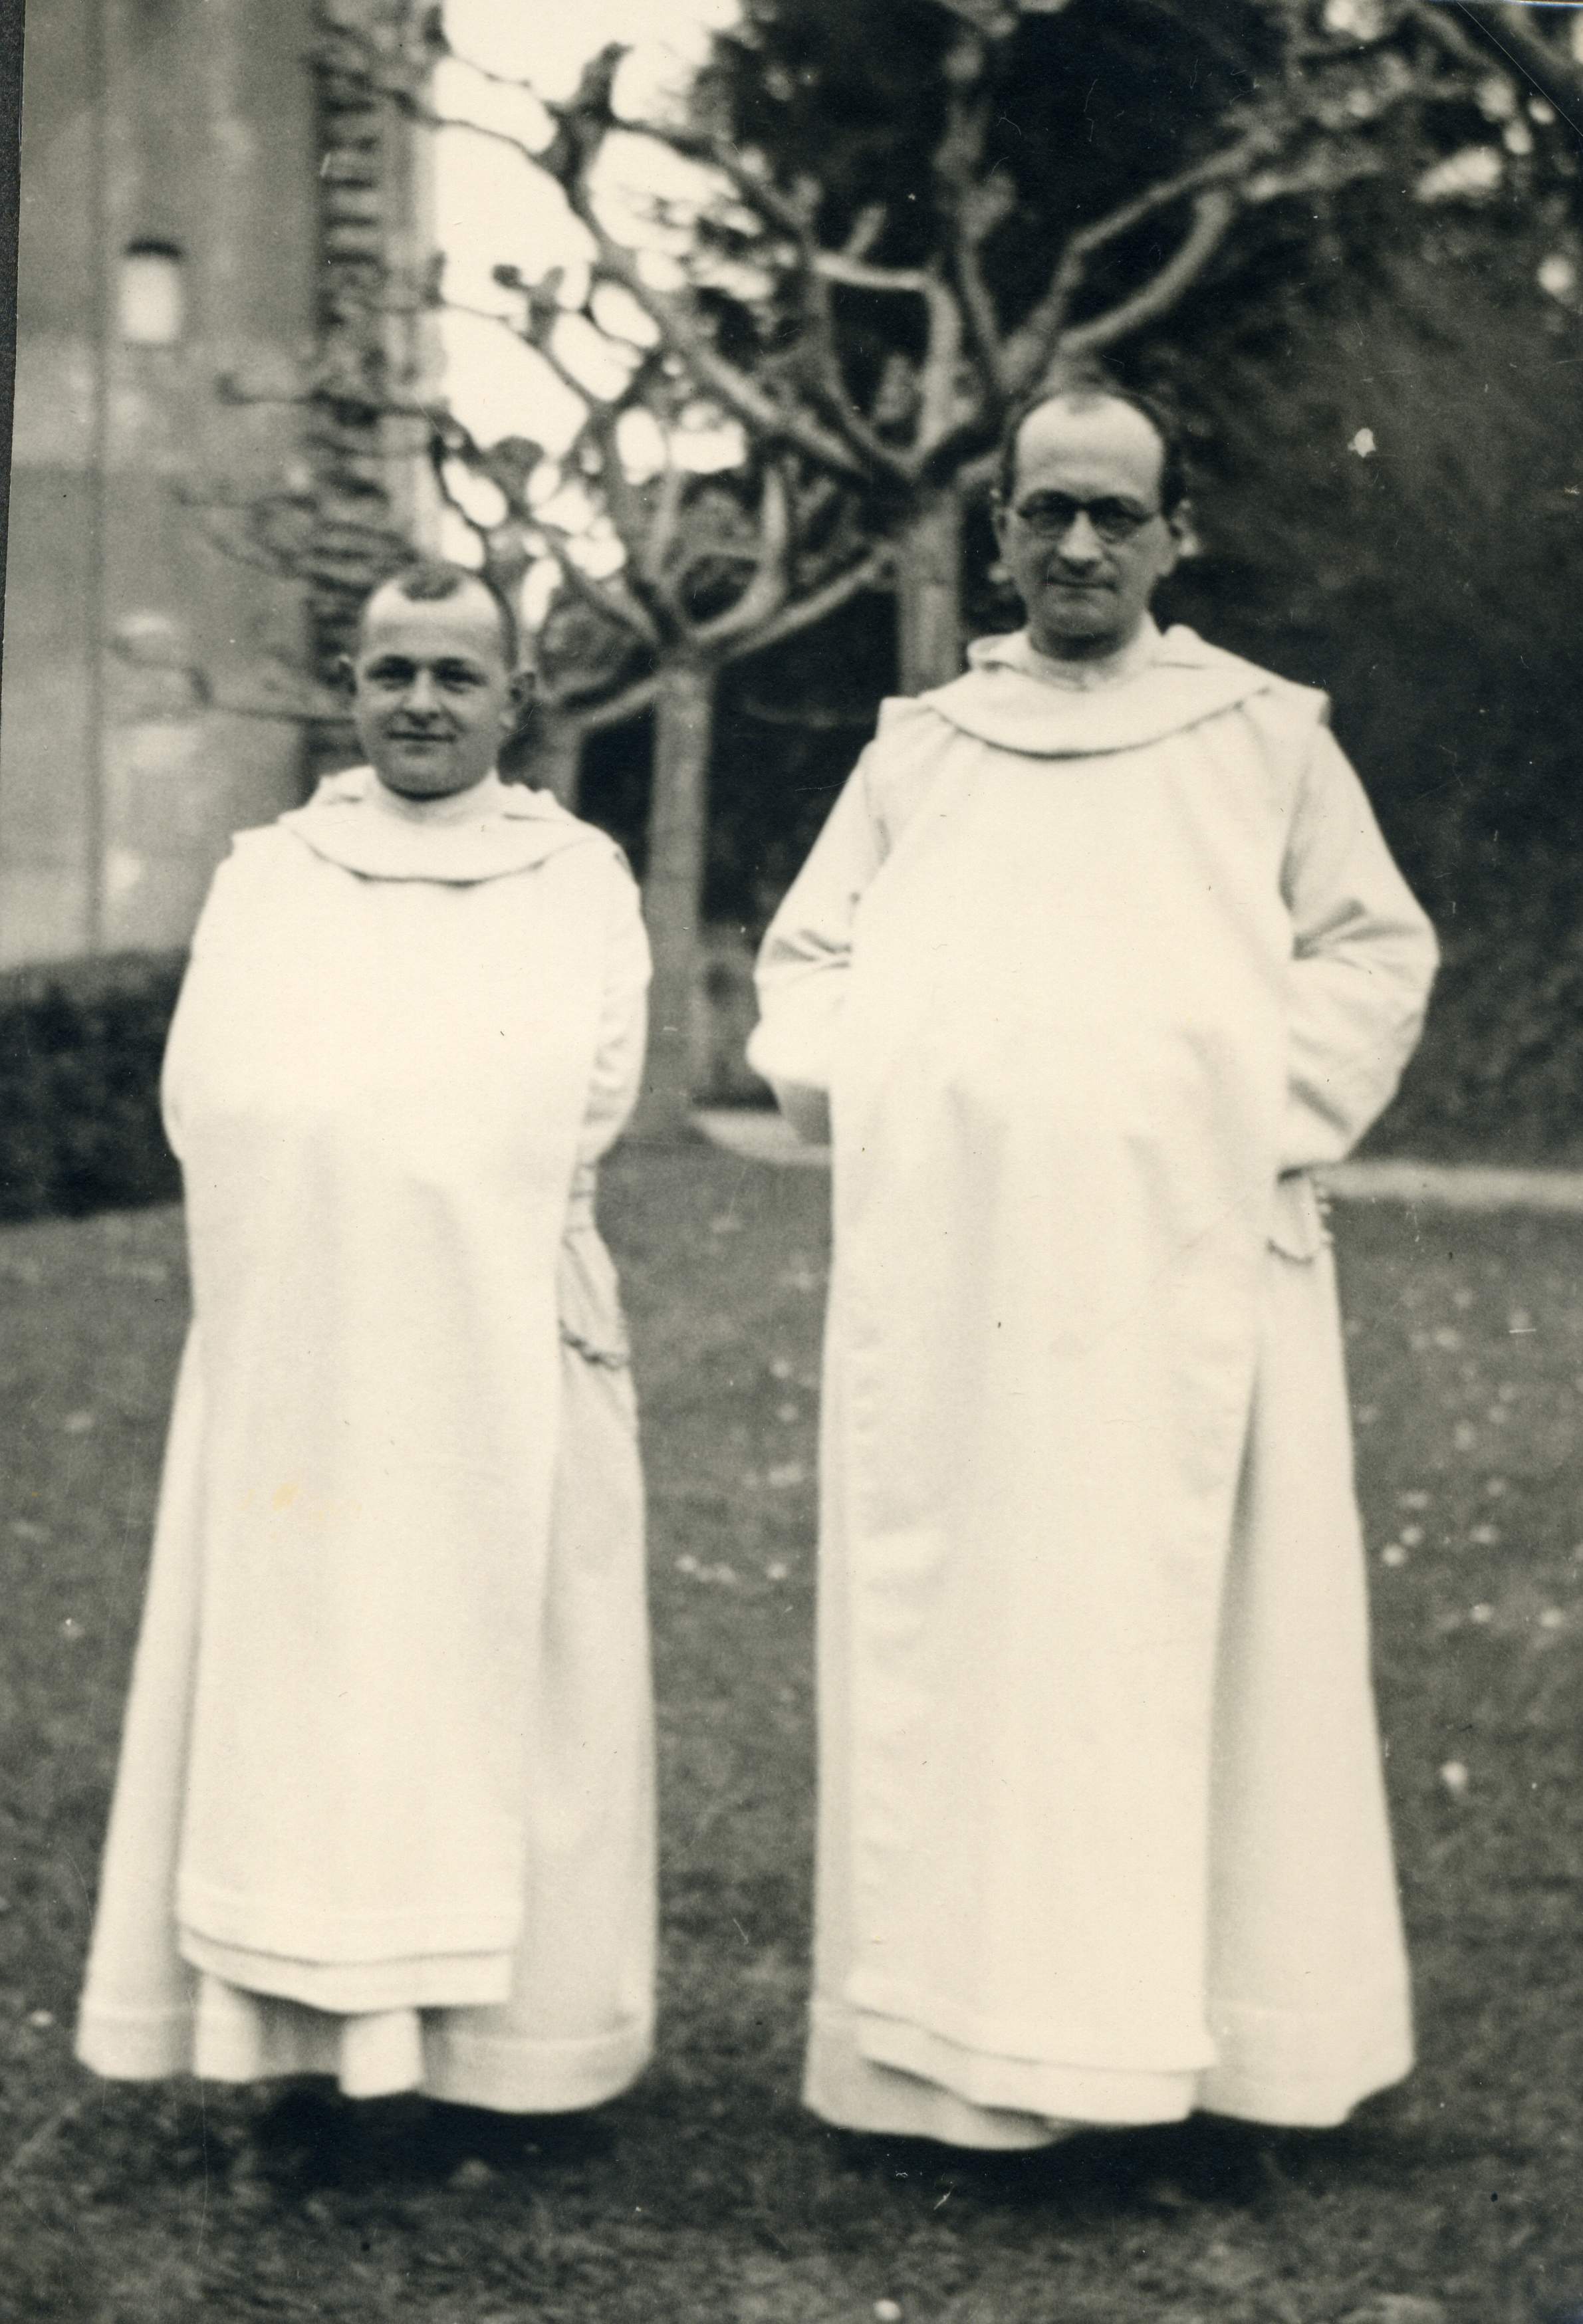 Deux moines en habit bénédictin blanc